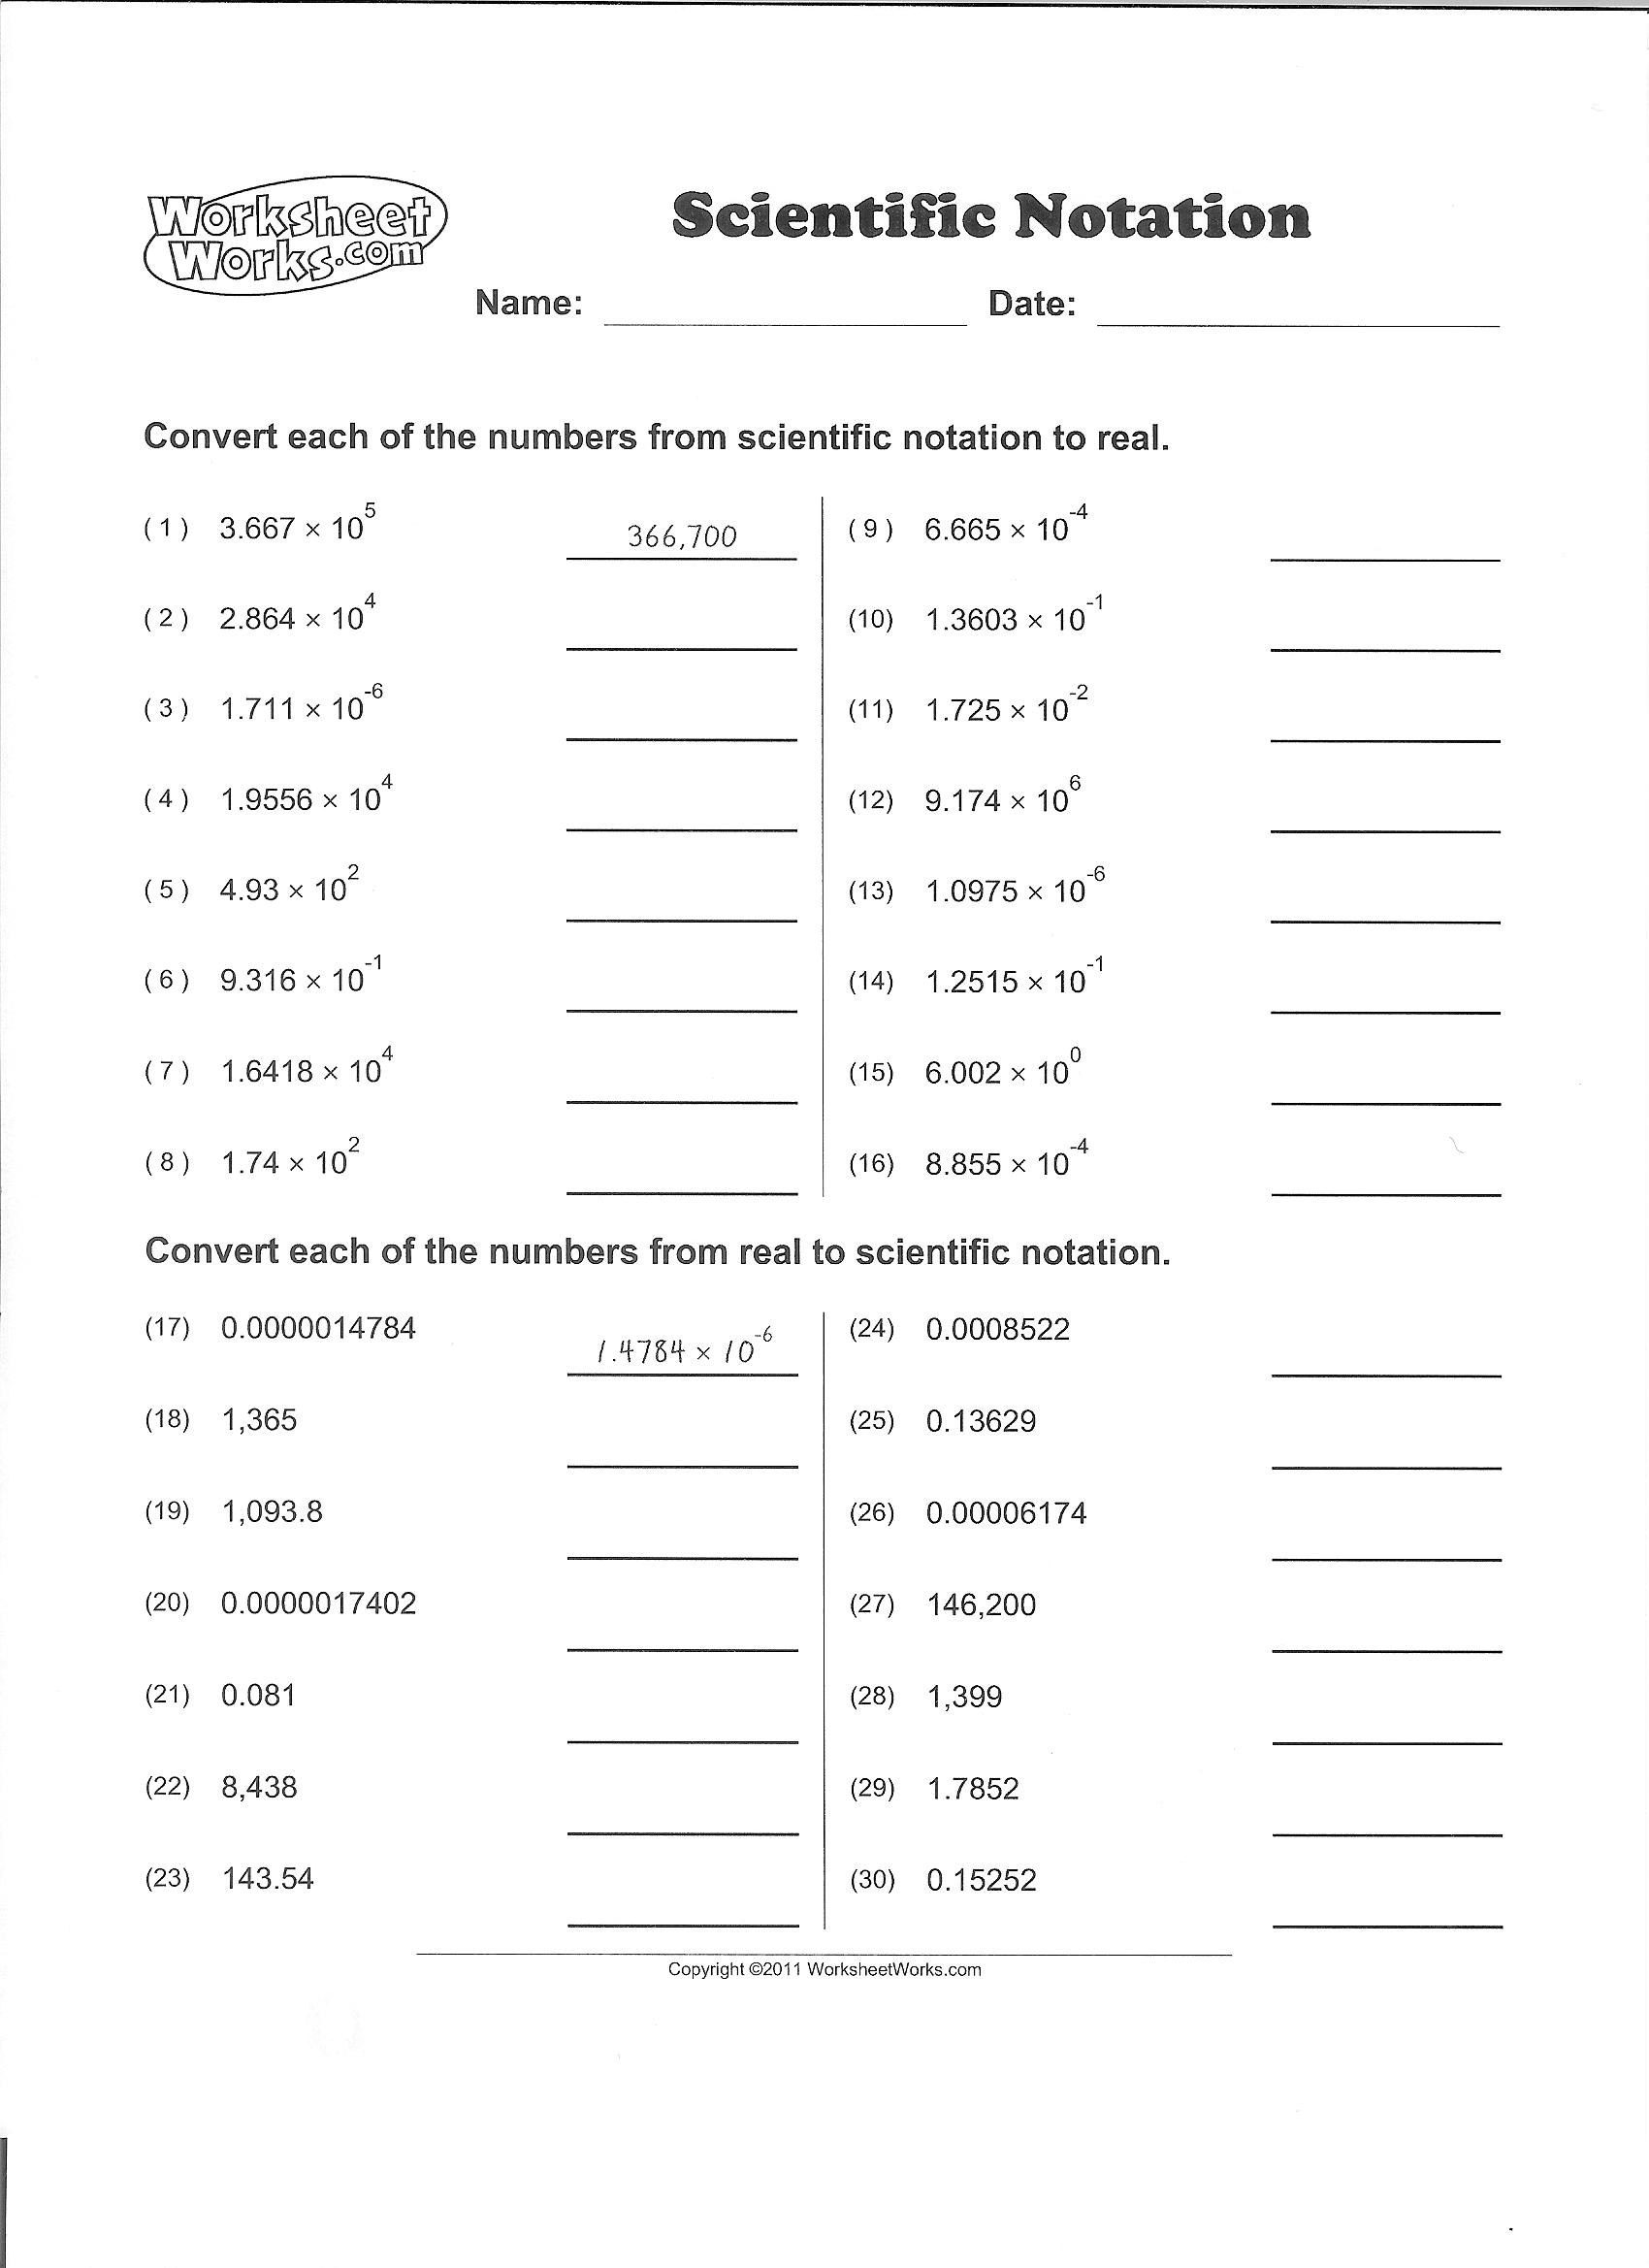 Scientific Notation Worksheet Pdf